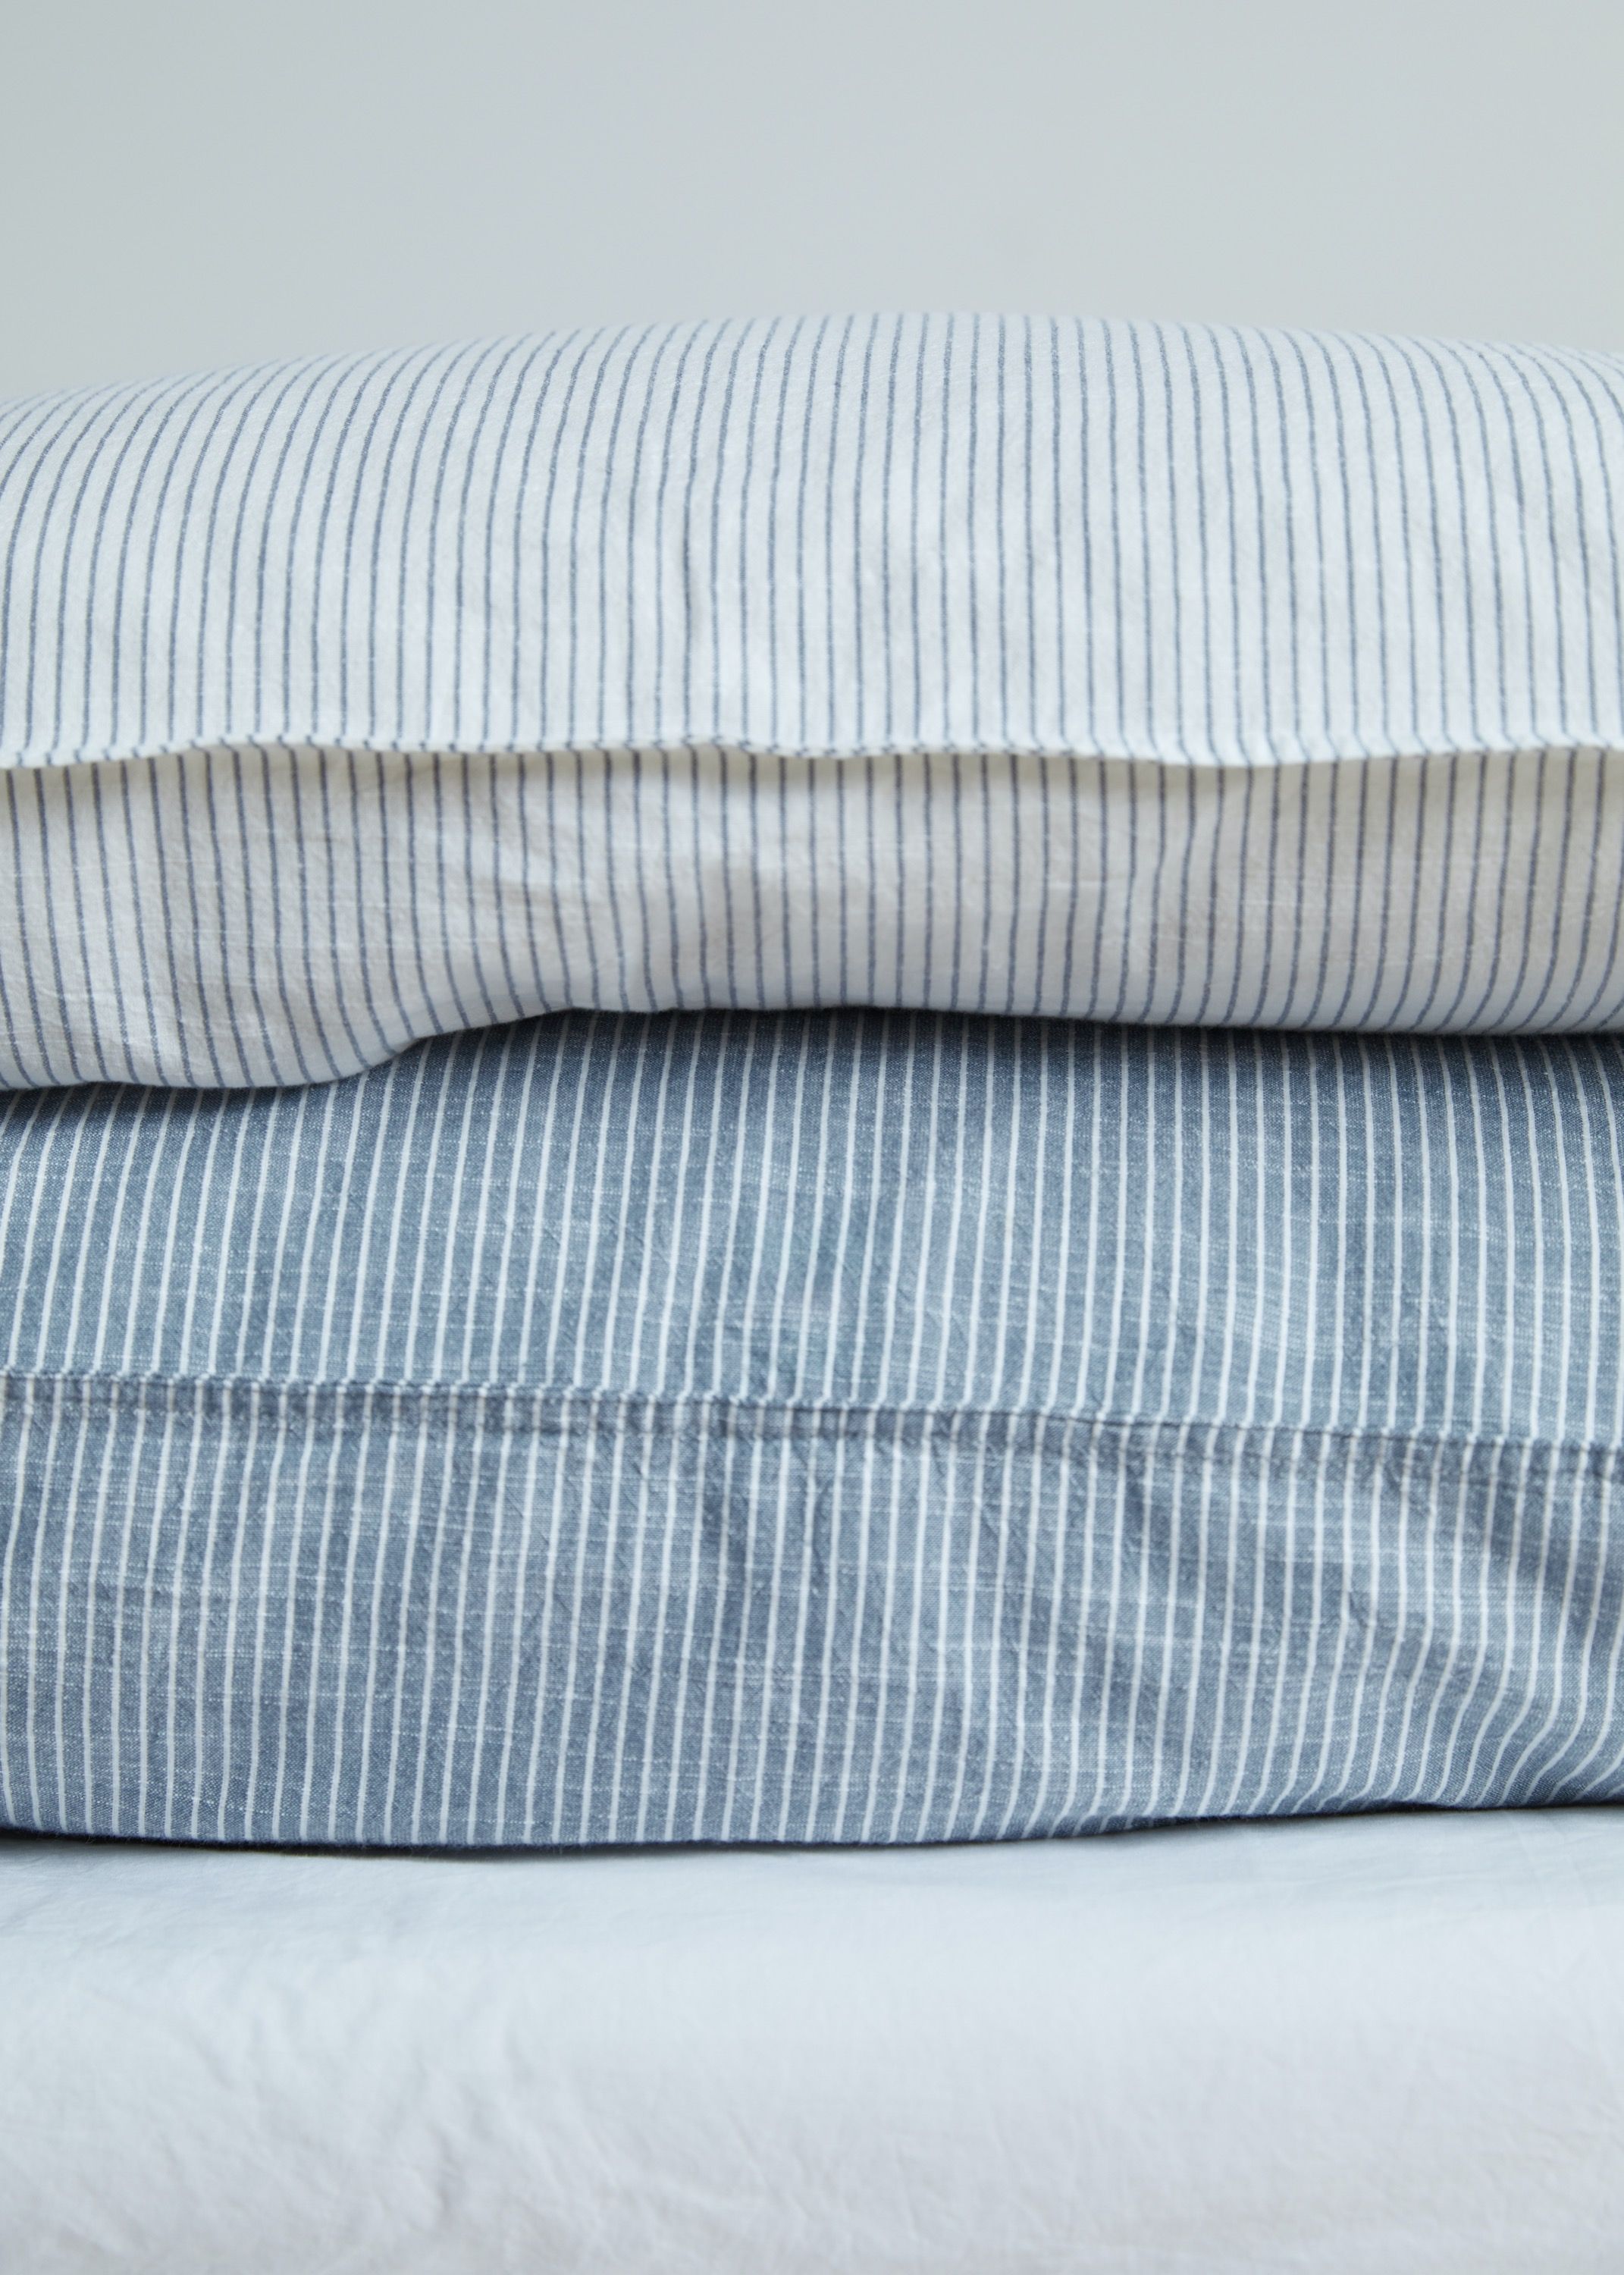 Bedlinen - Duvet Set Double - Striped (200x220 + 2 pillow cases)